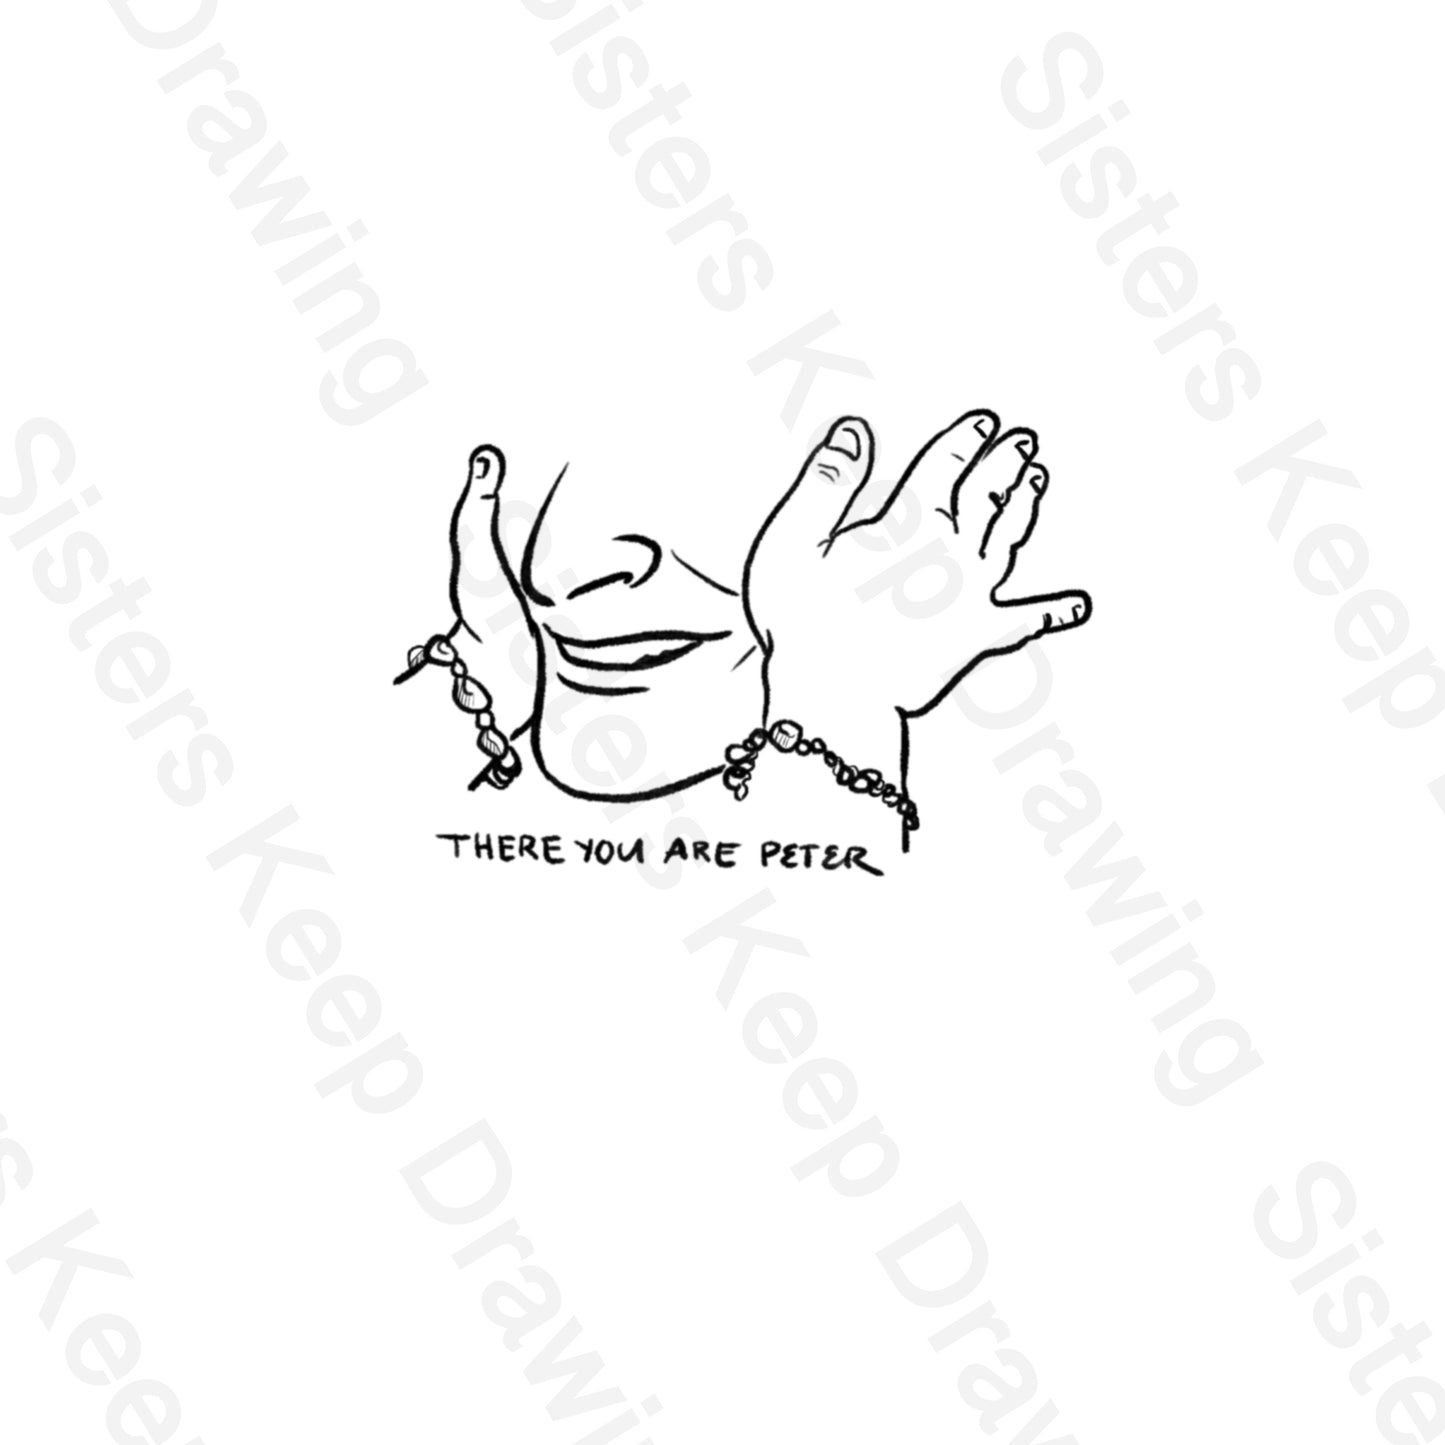 Peter Pan's Smile - Tattoo Transparent PNG- instant download digital printable artwork